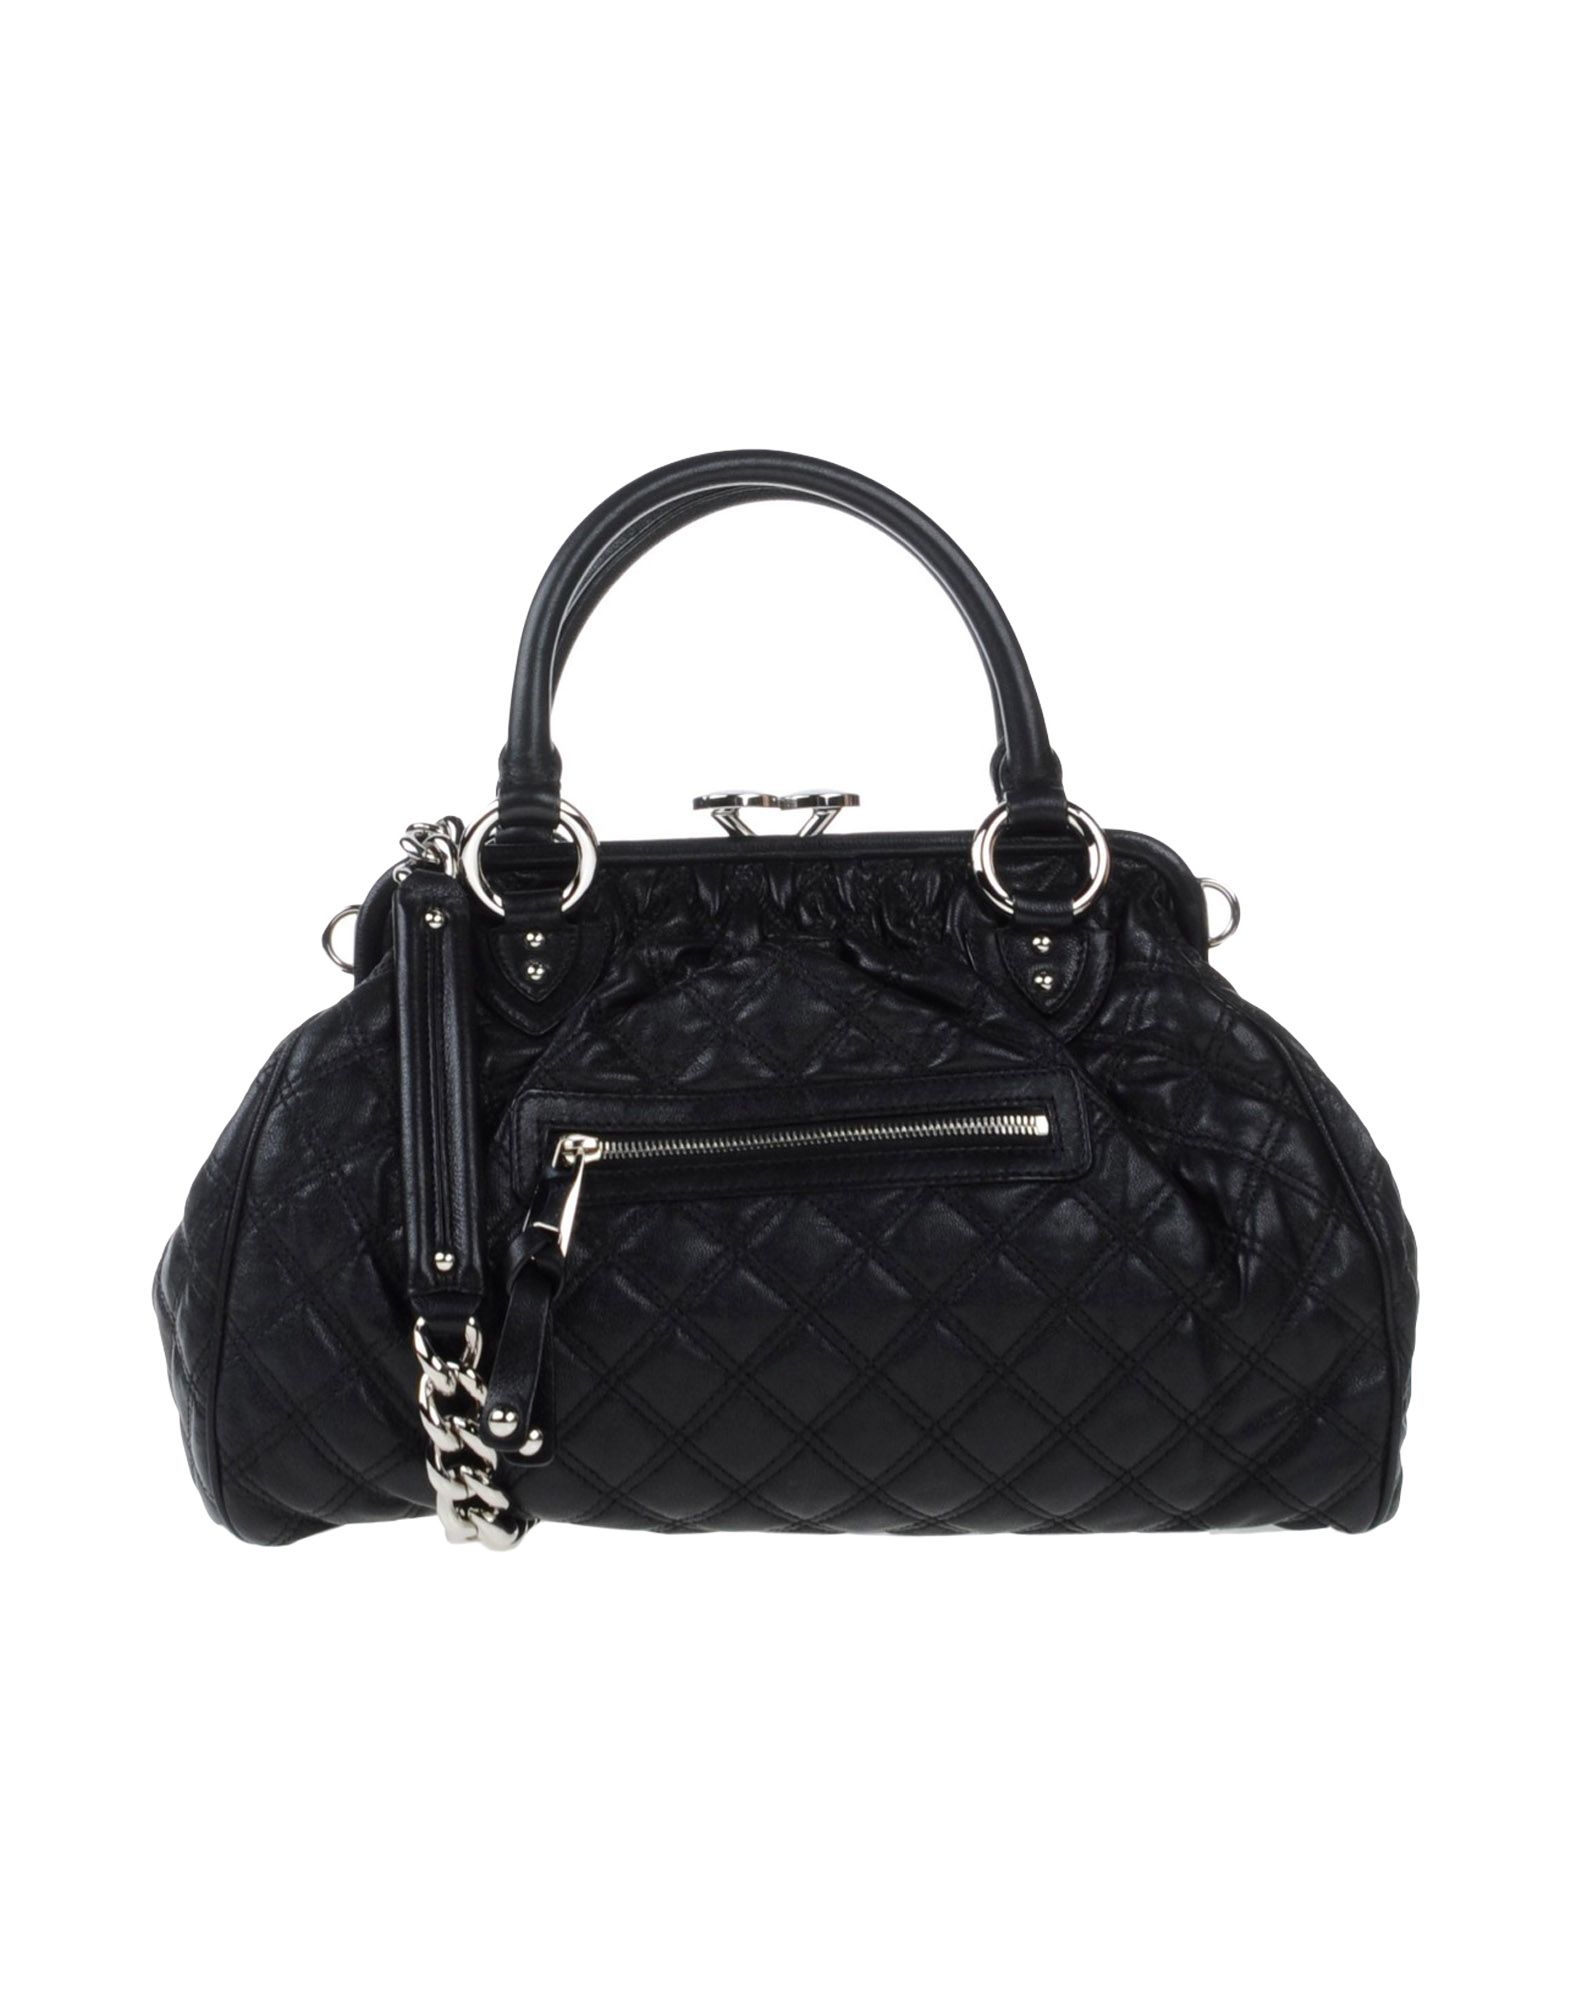 Lyst - Marc Jacobs Handbag in Black